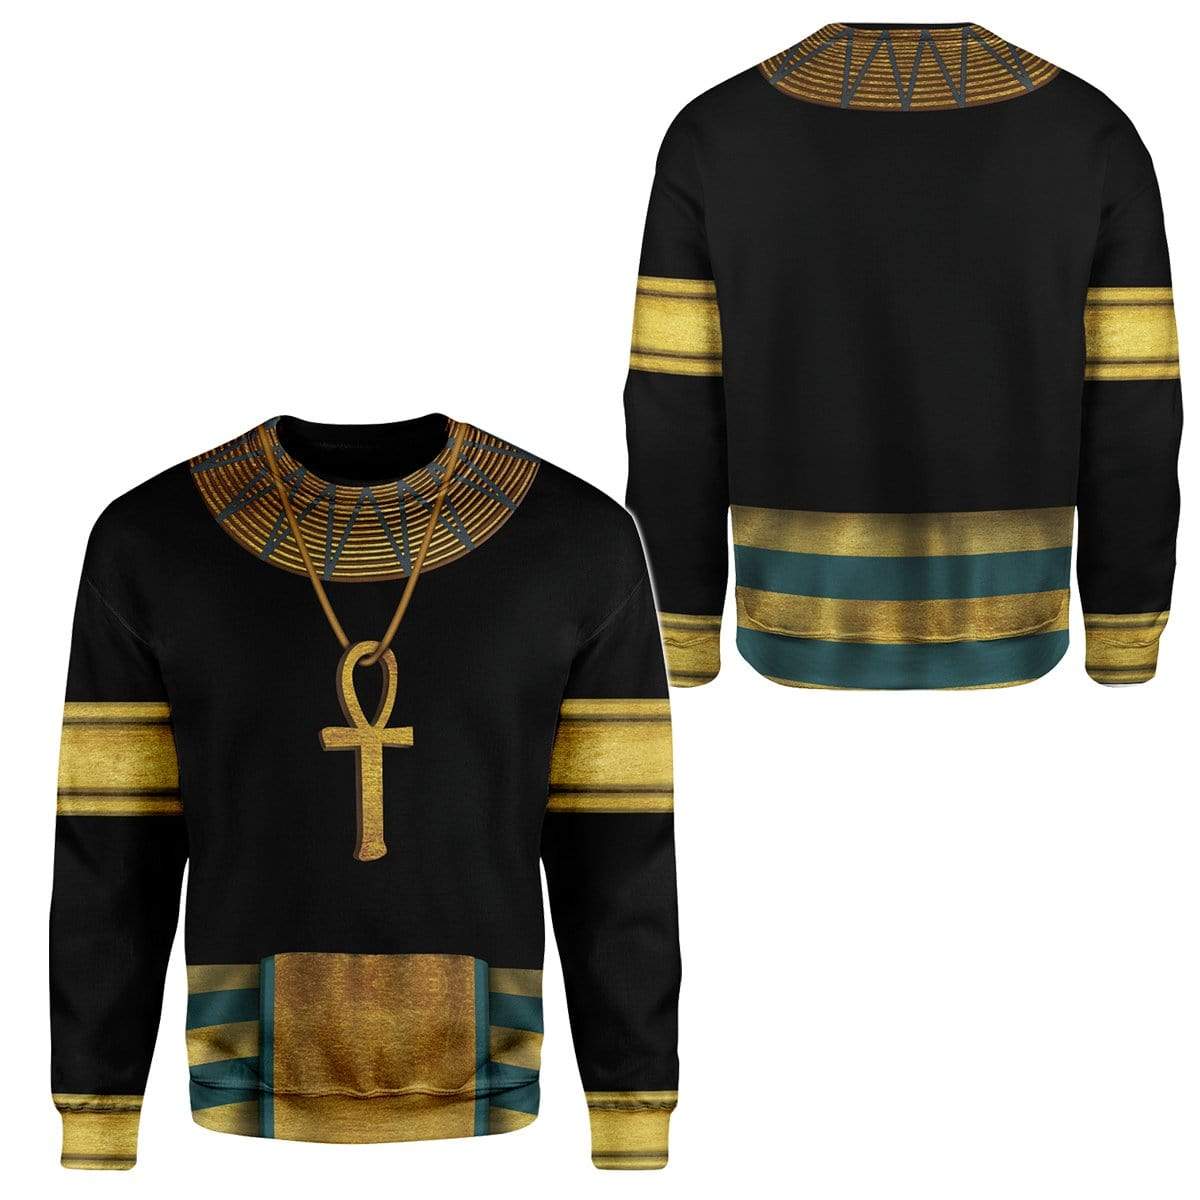 Anubis Mythologies Custom T-Shirts Hoodies Apparel CO-QM2412191 3D Custom Fleece Hoodies 